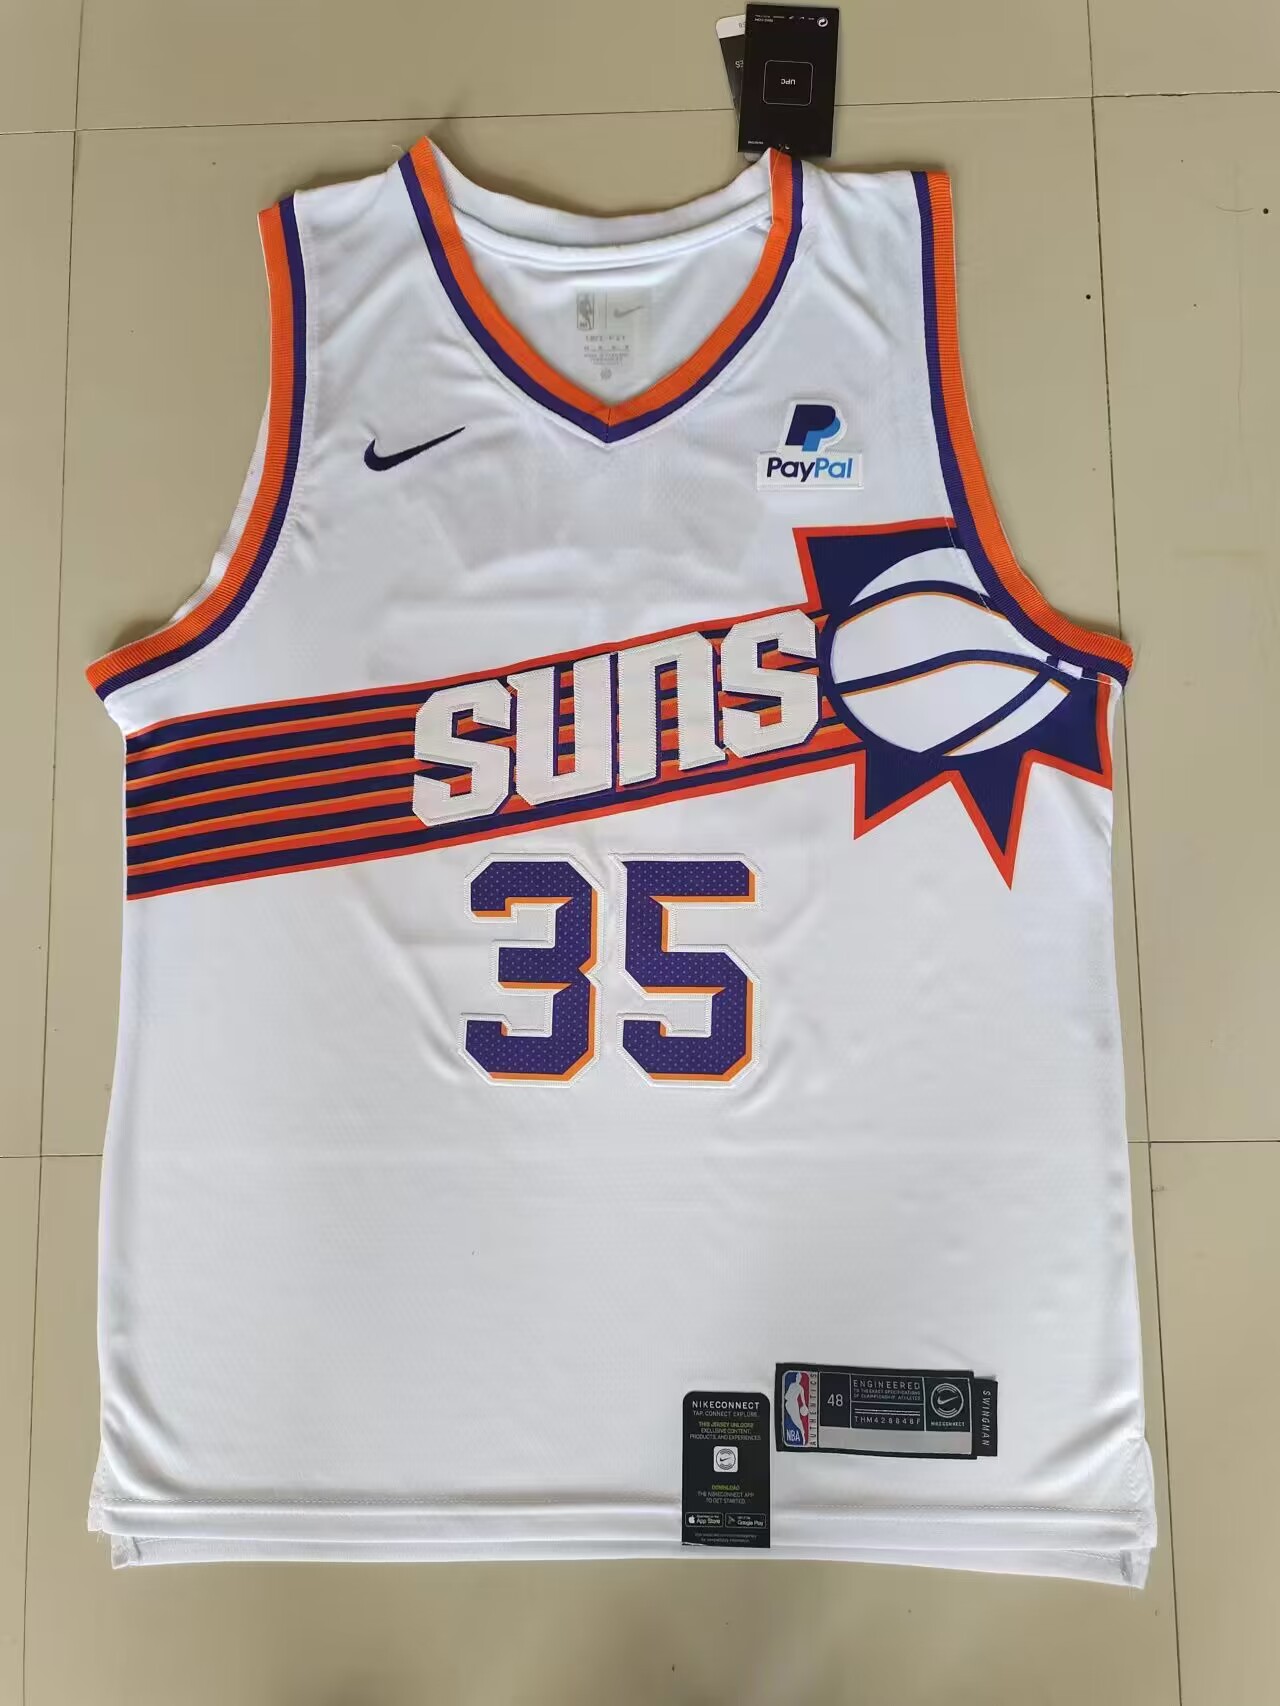 2023/24 Suns DURANT #35 White NBA Jerseys